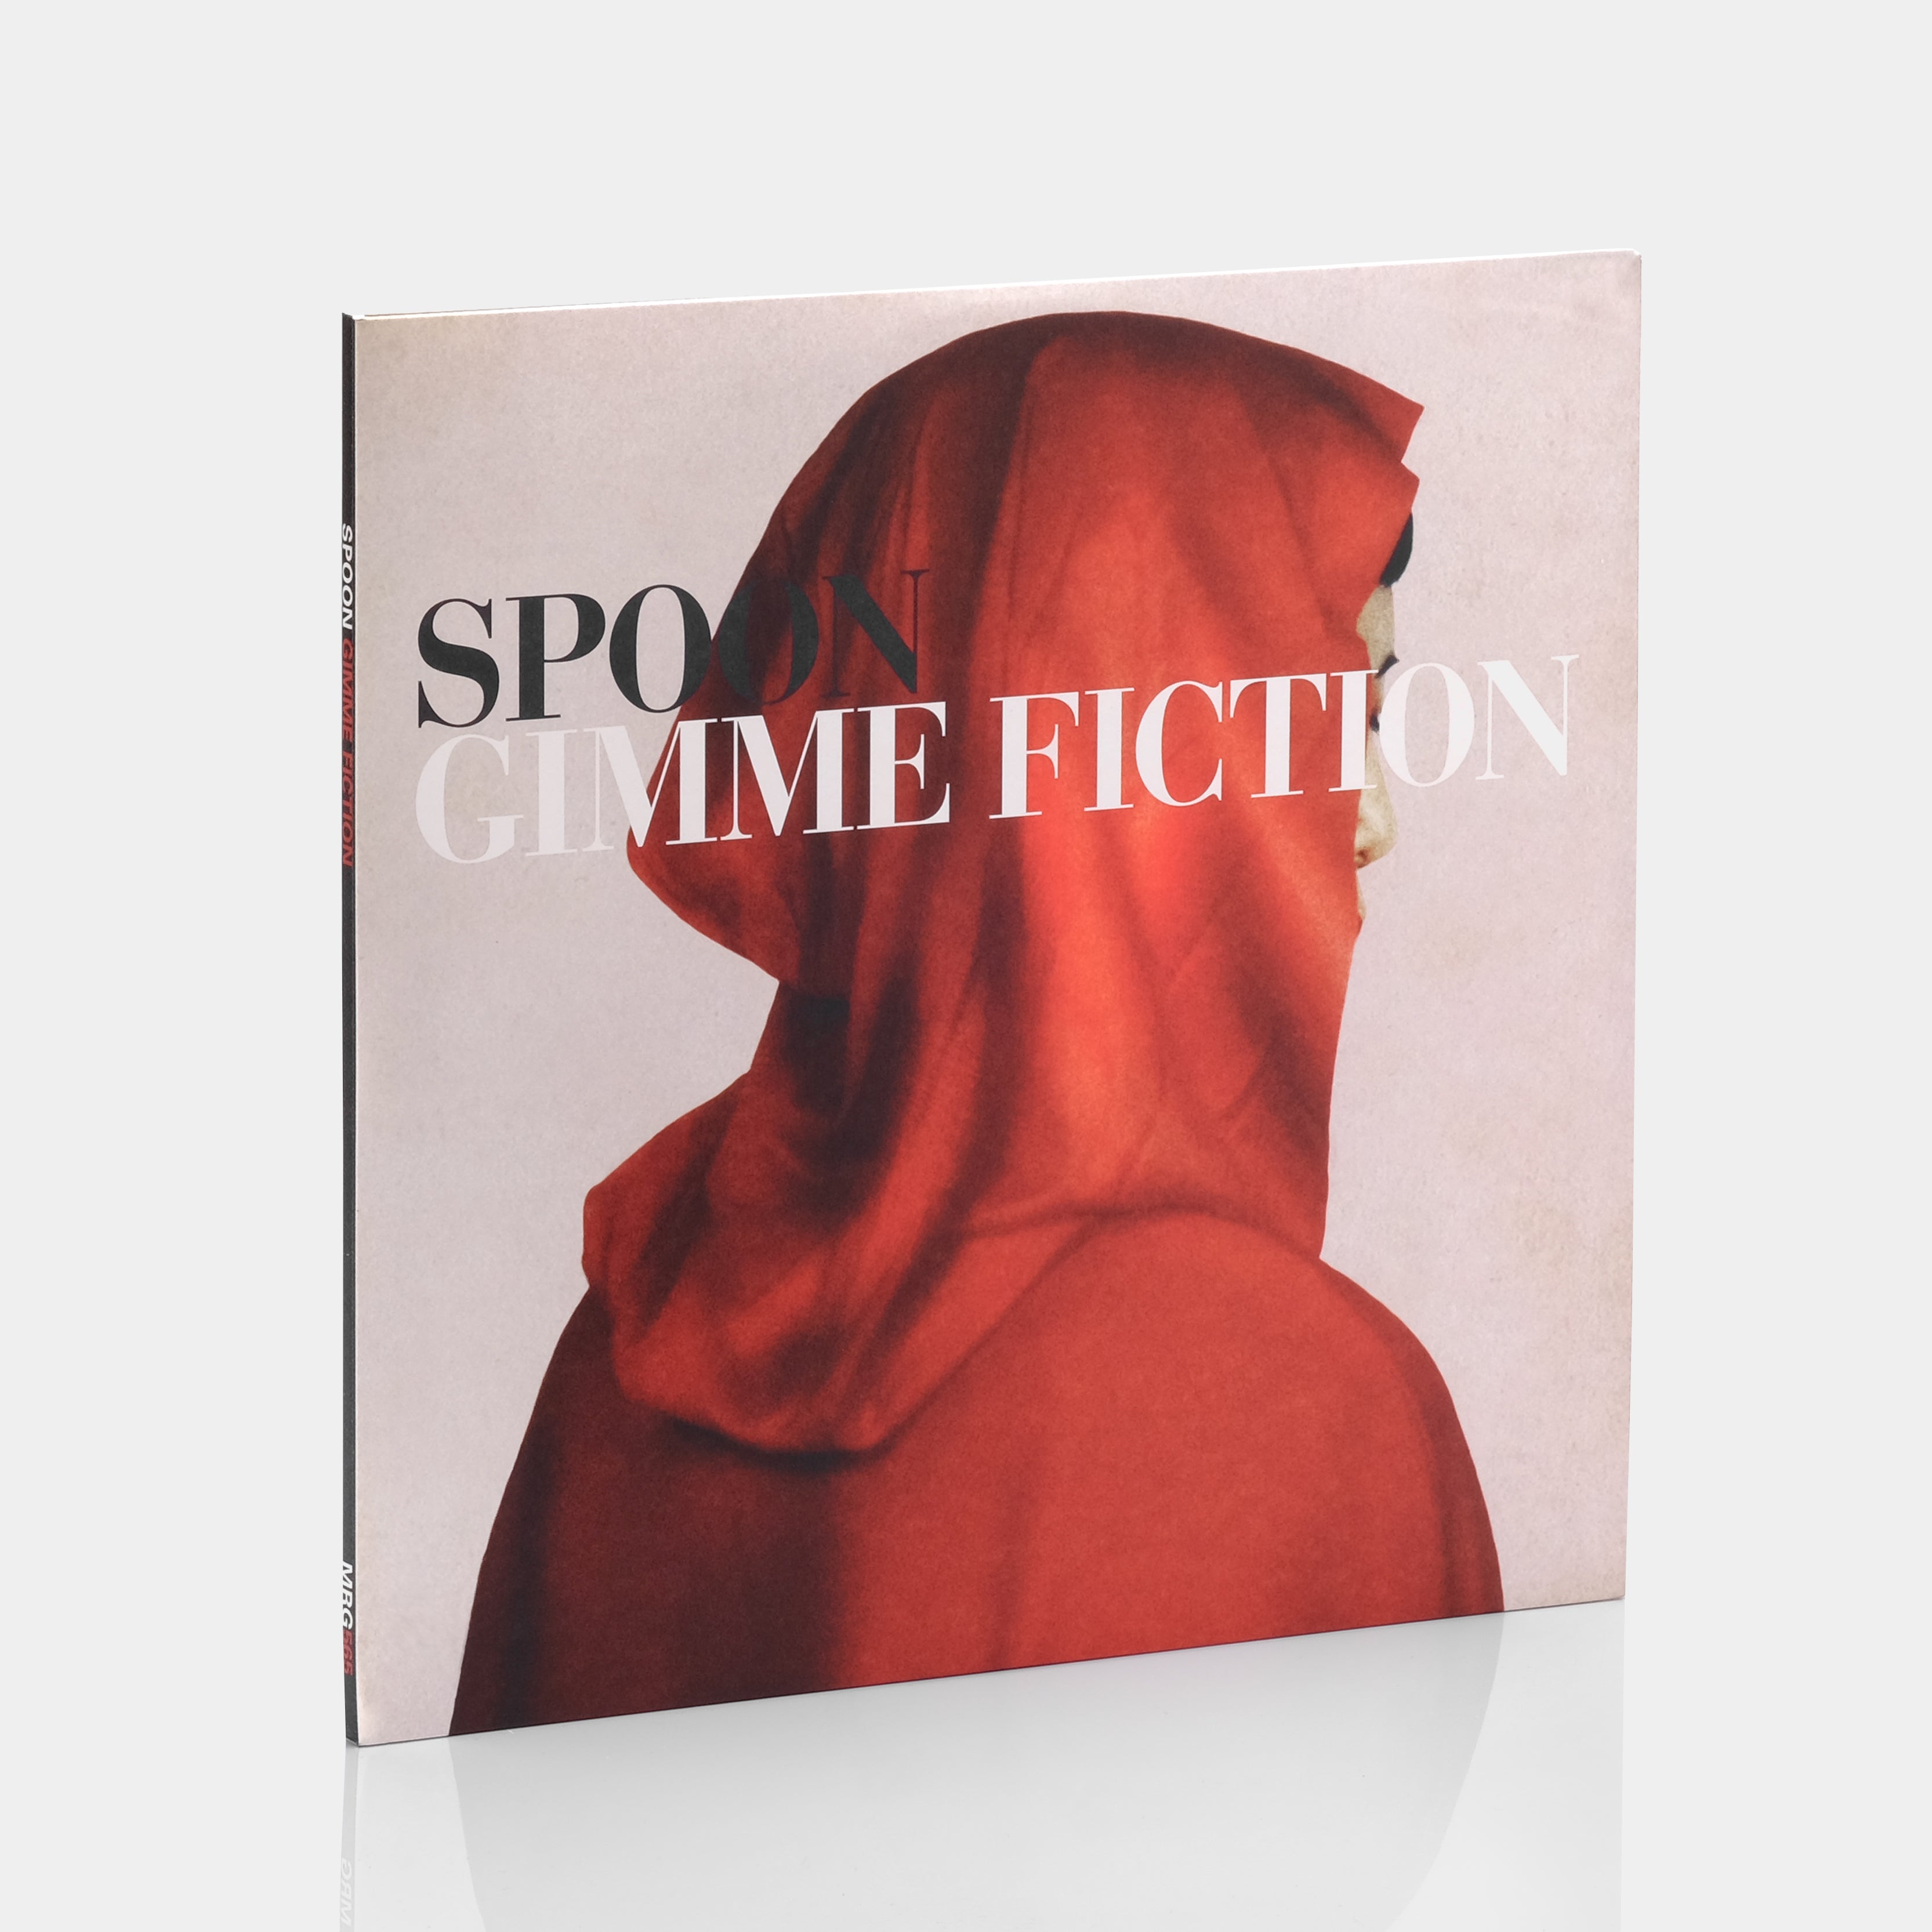 Spoon - Gimme Fiction (10th Anniversary Edition) 2xLP Vinyl Record